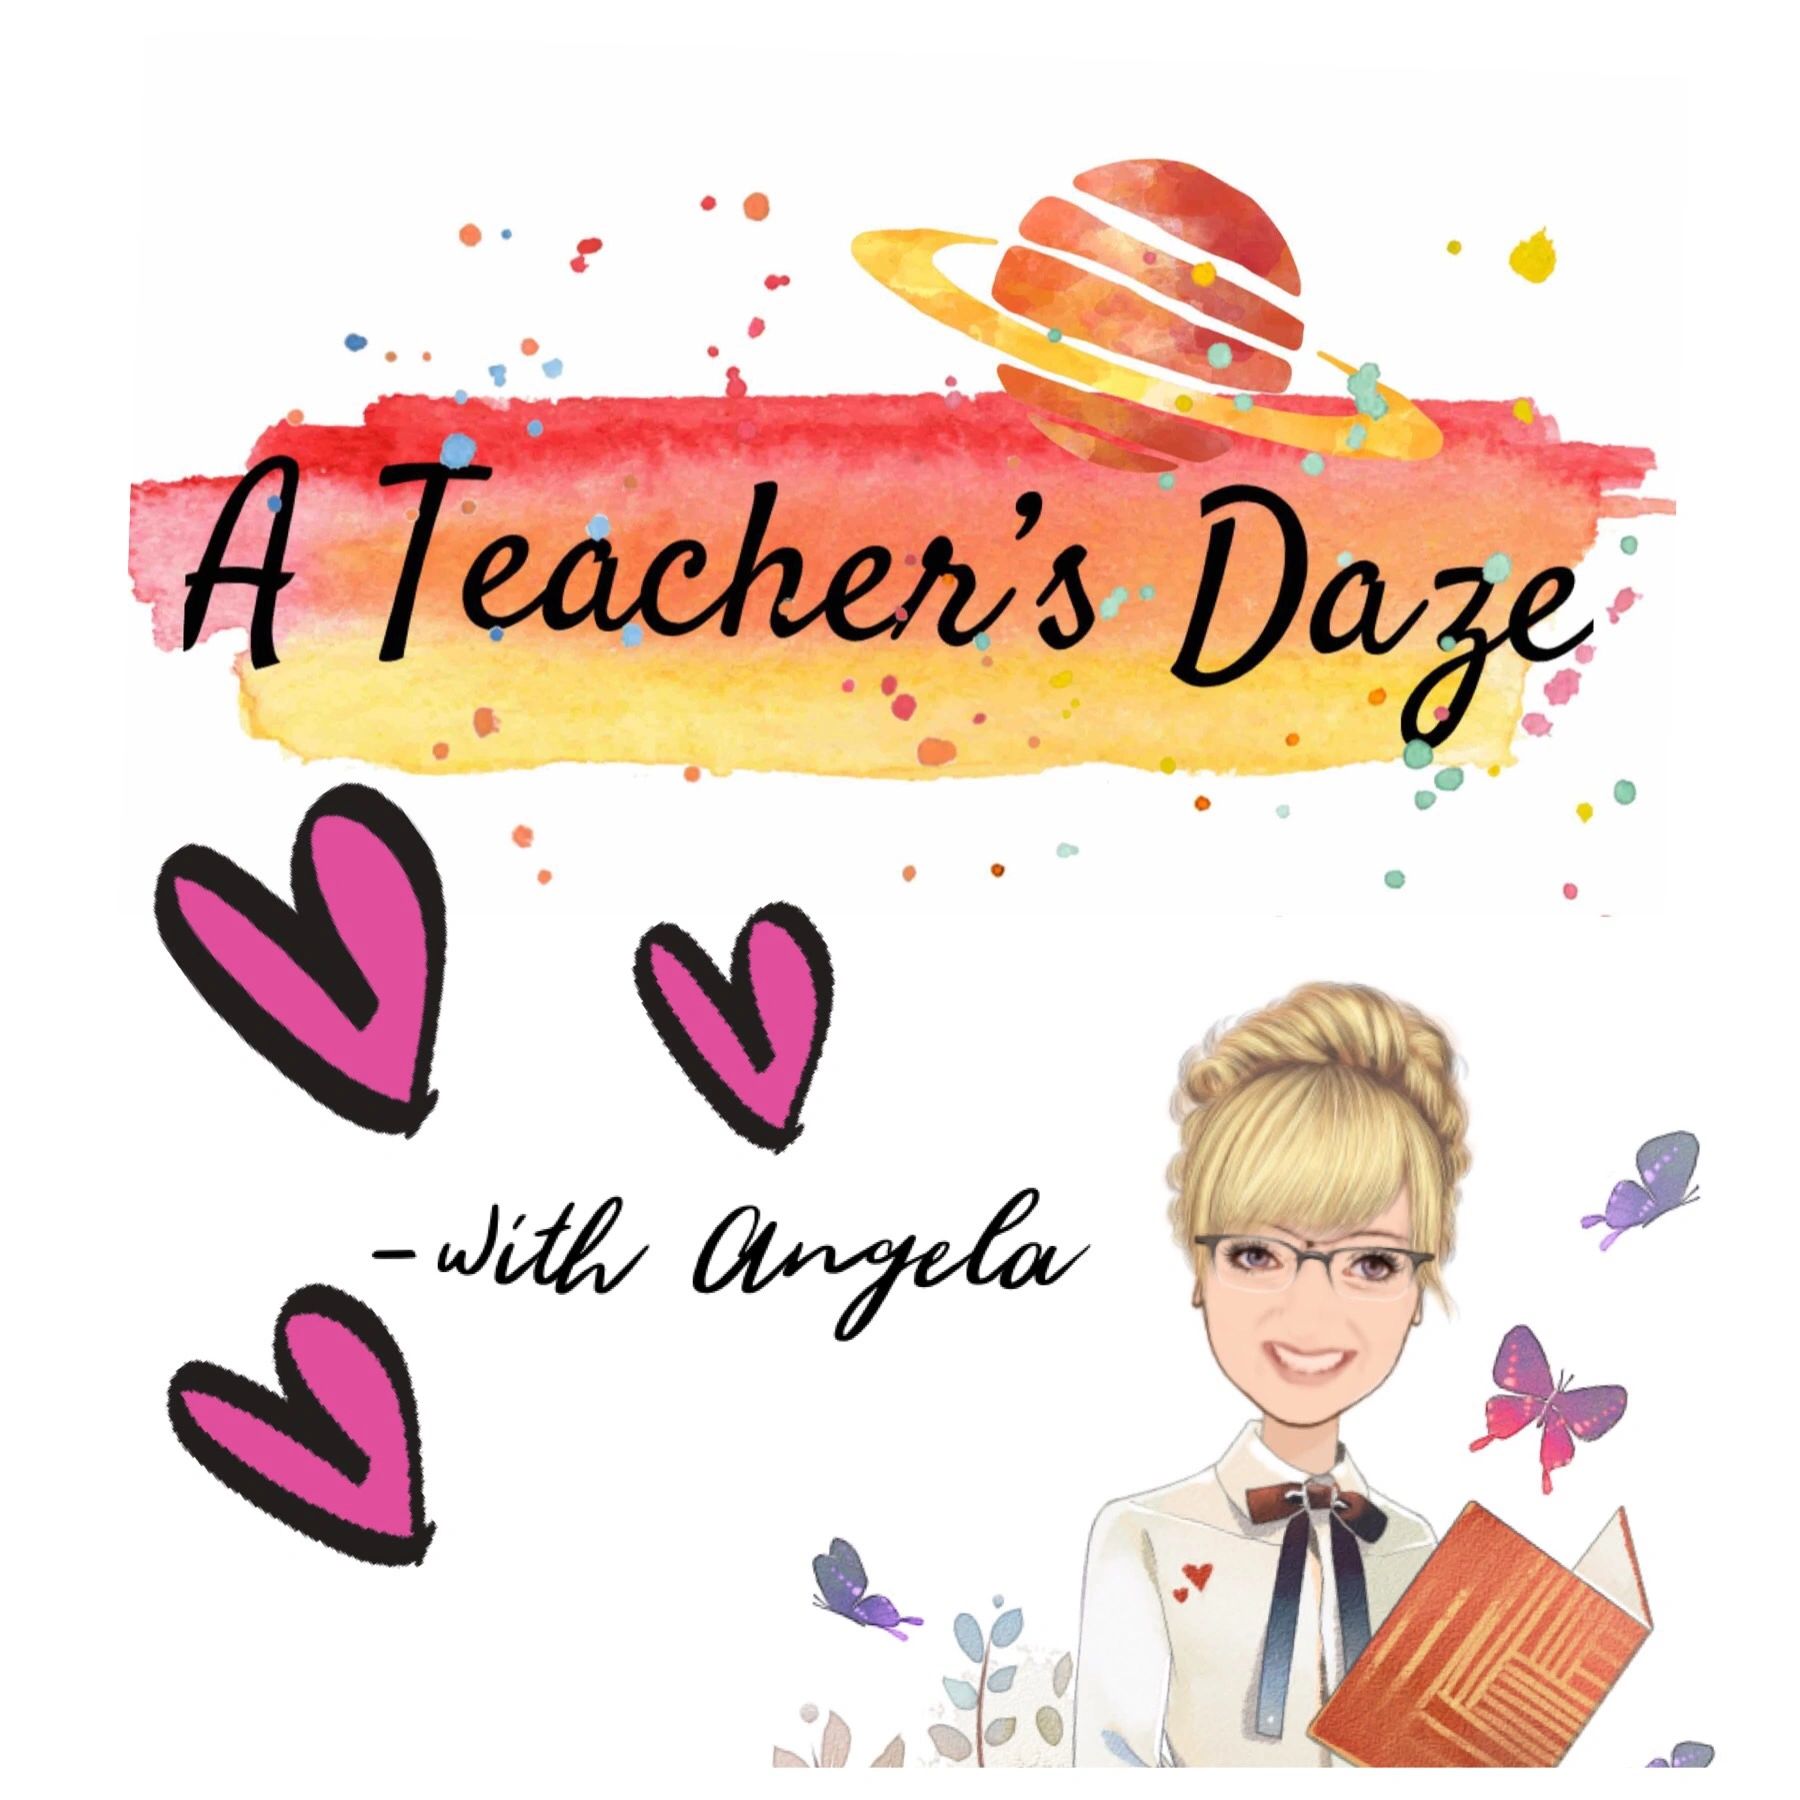 A Teacher’s Daze, Independent consultant, education, resources, teachers, collaboration 